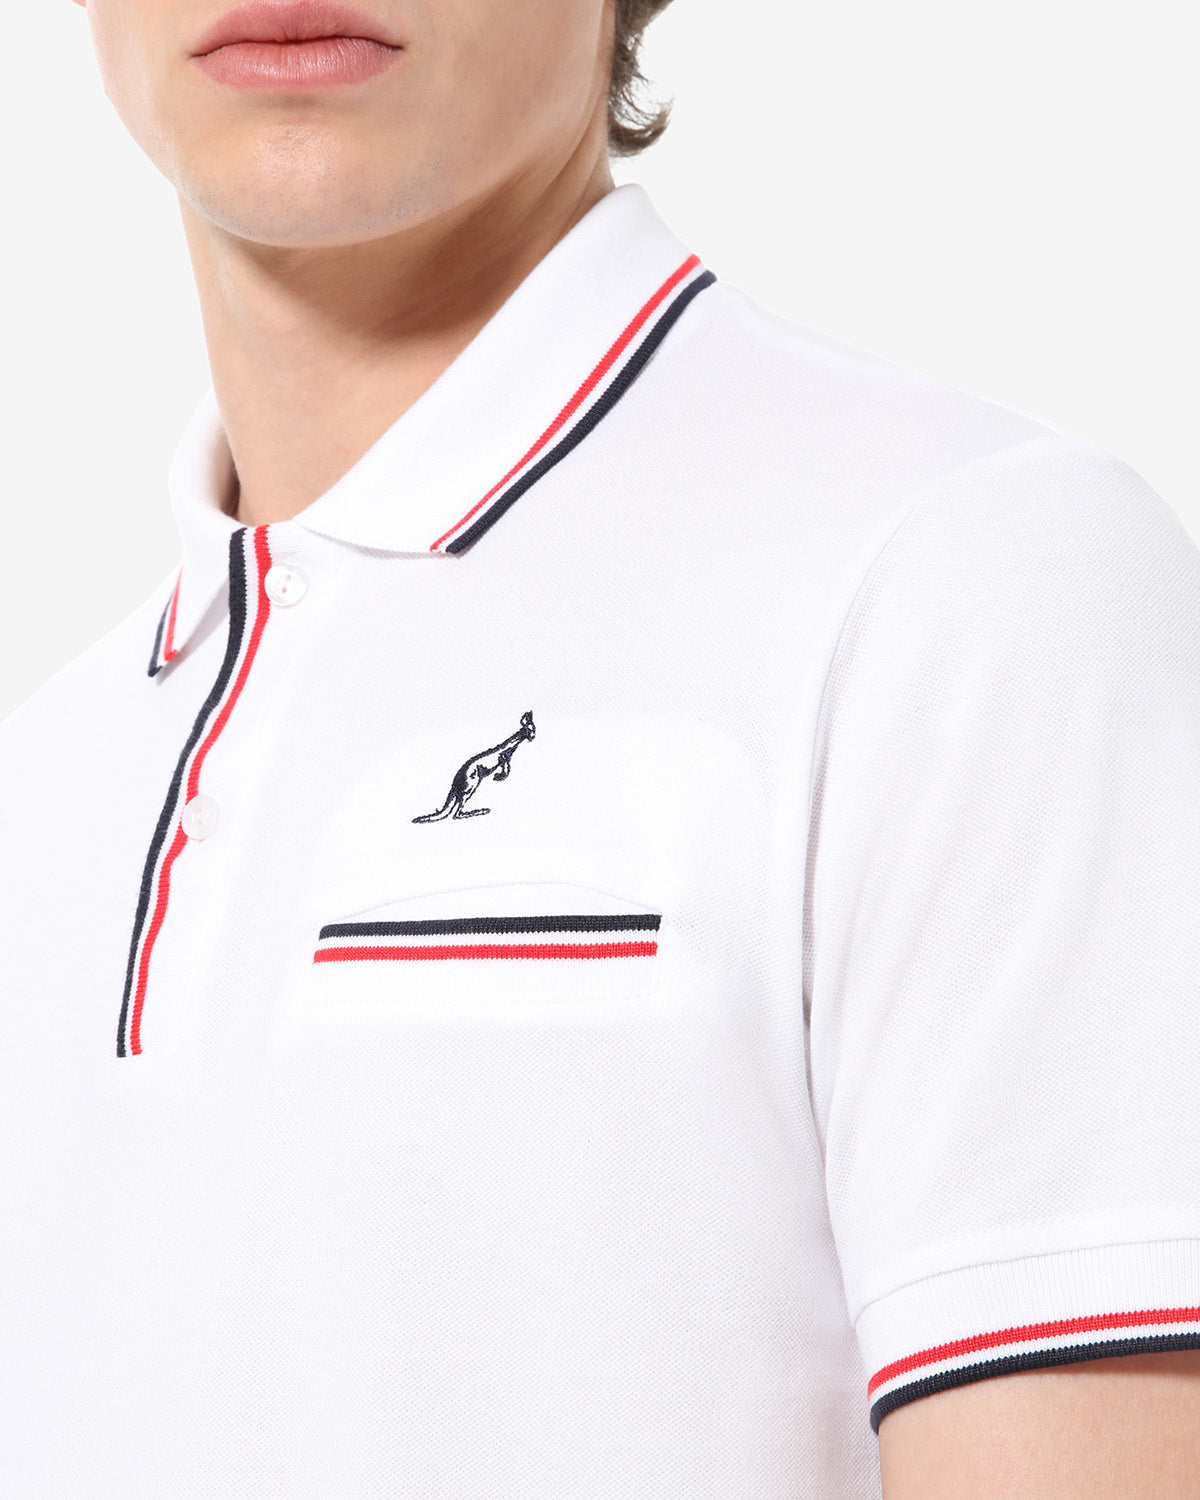 Pocket Piquet Polo Shirt: Australian Sportswear